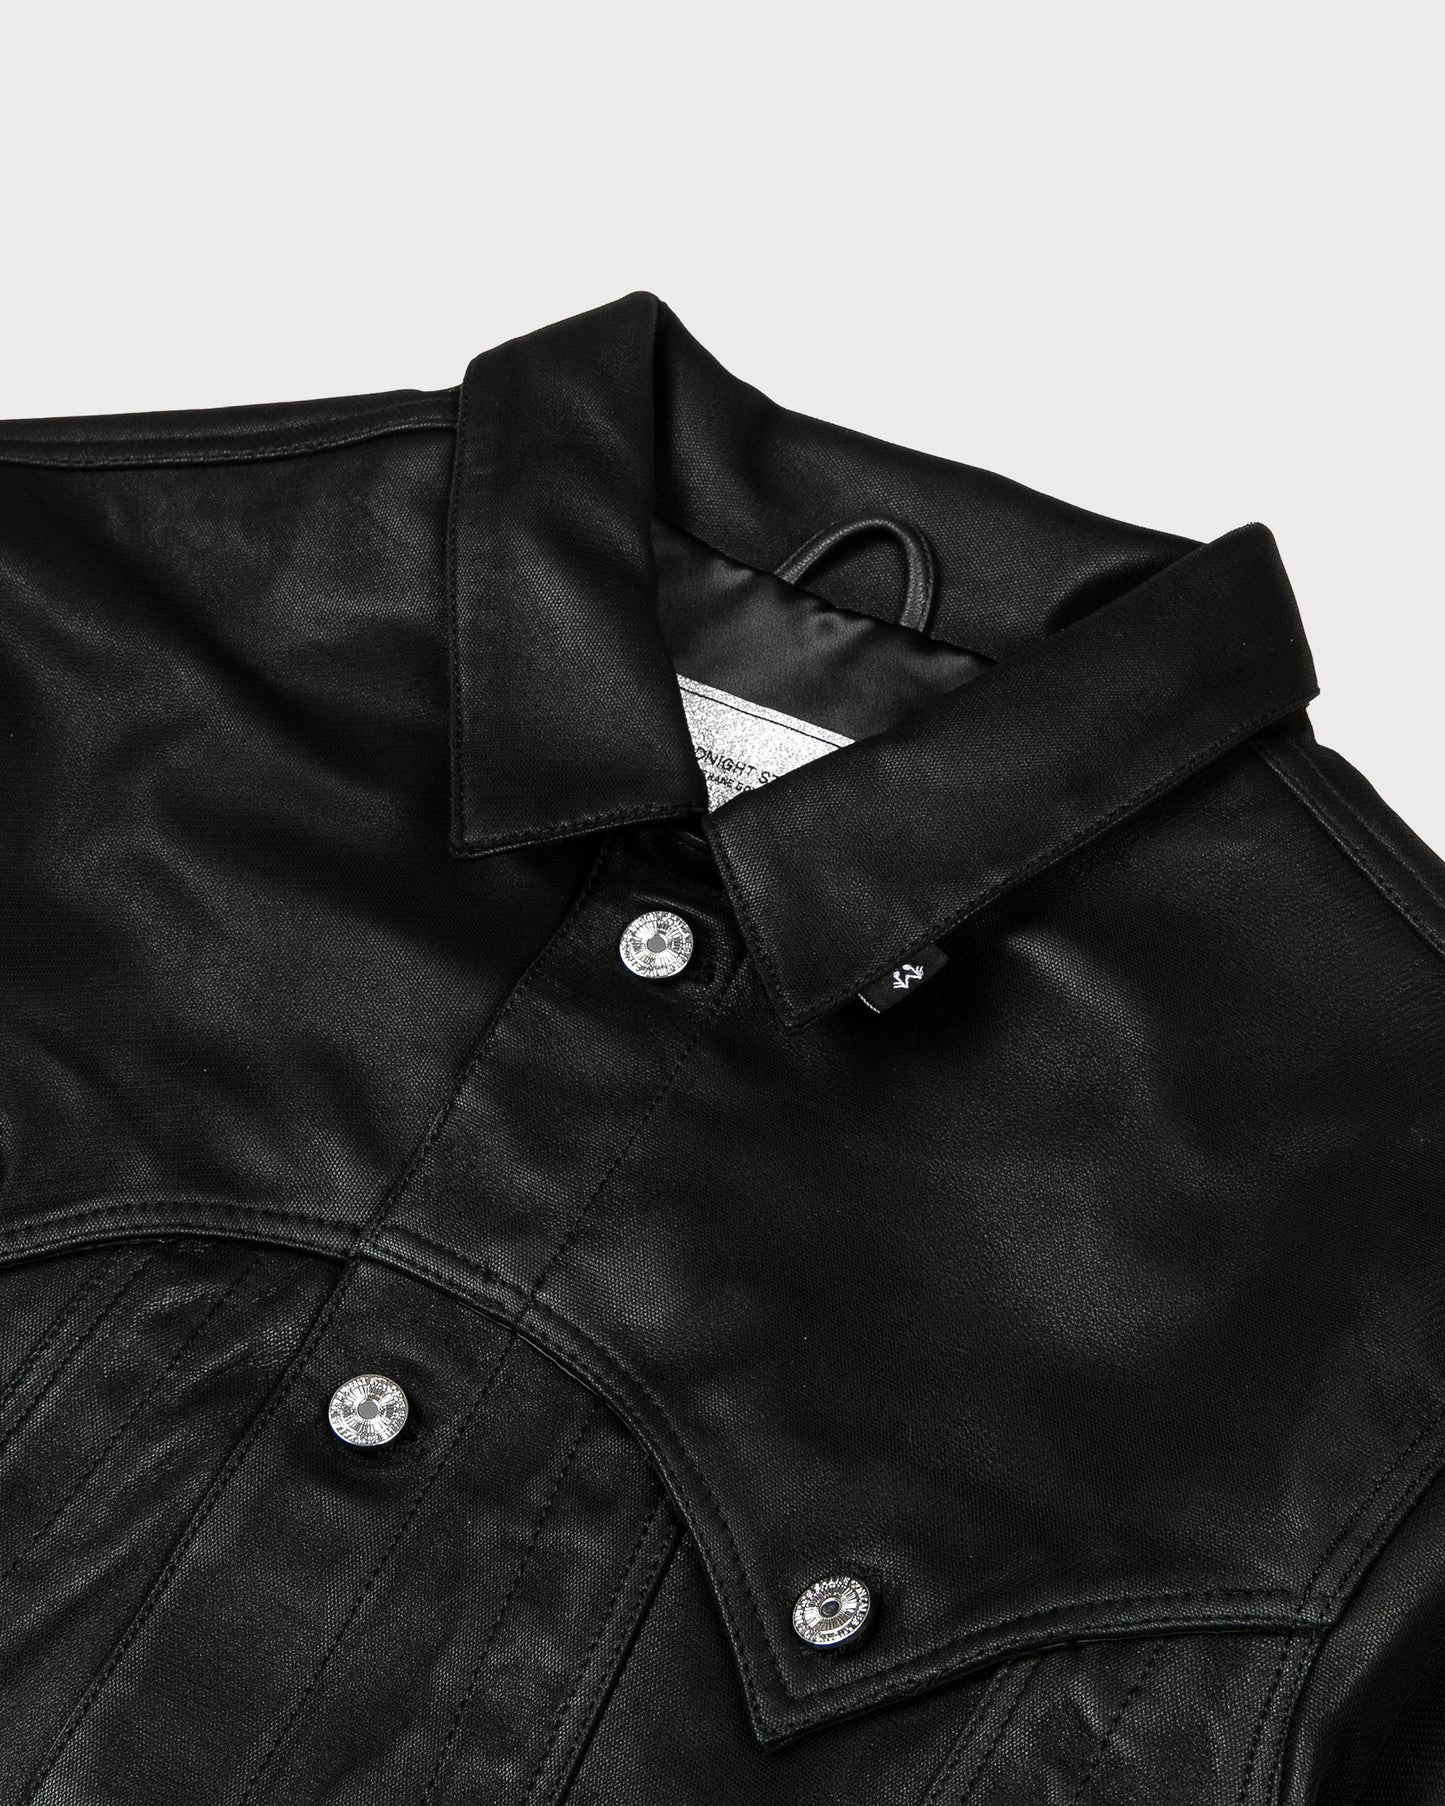 Leather Tulle Trucker Jacket - Black